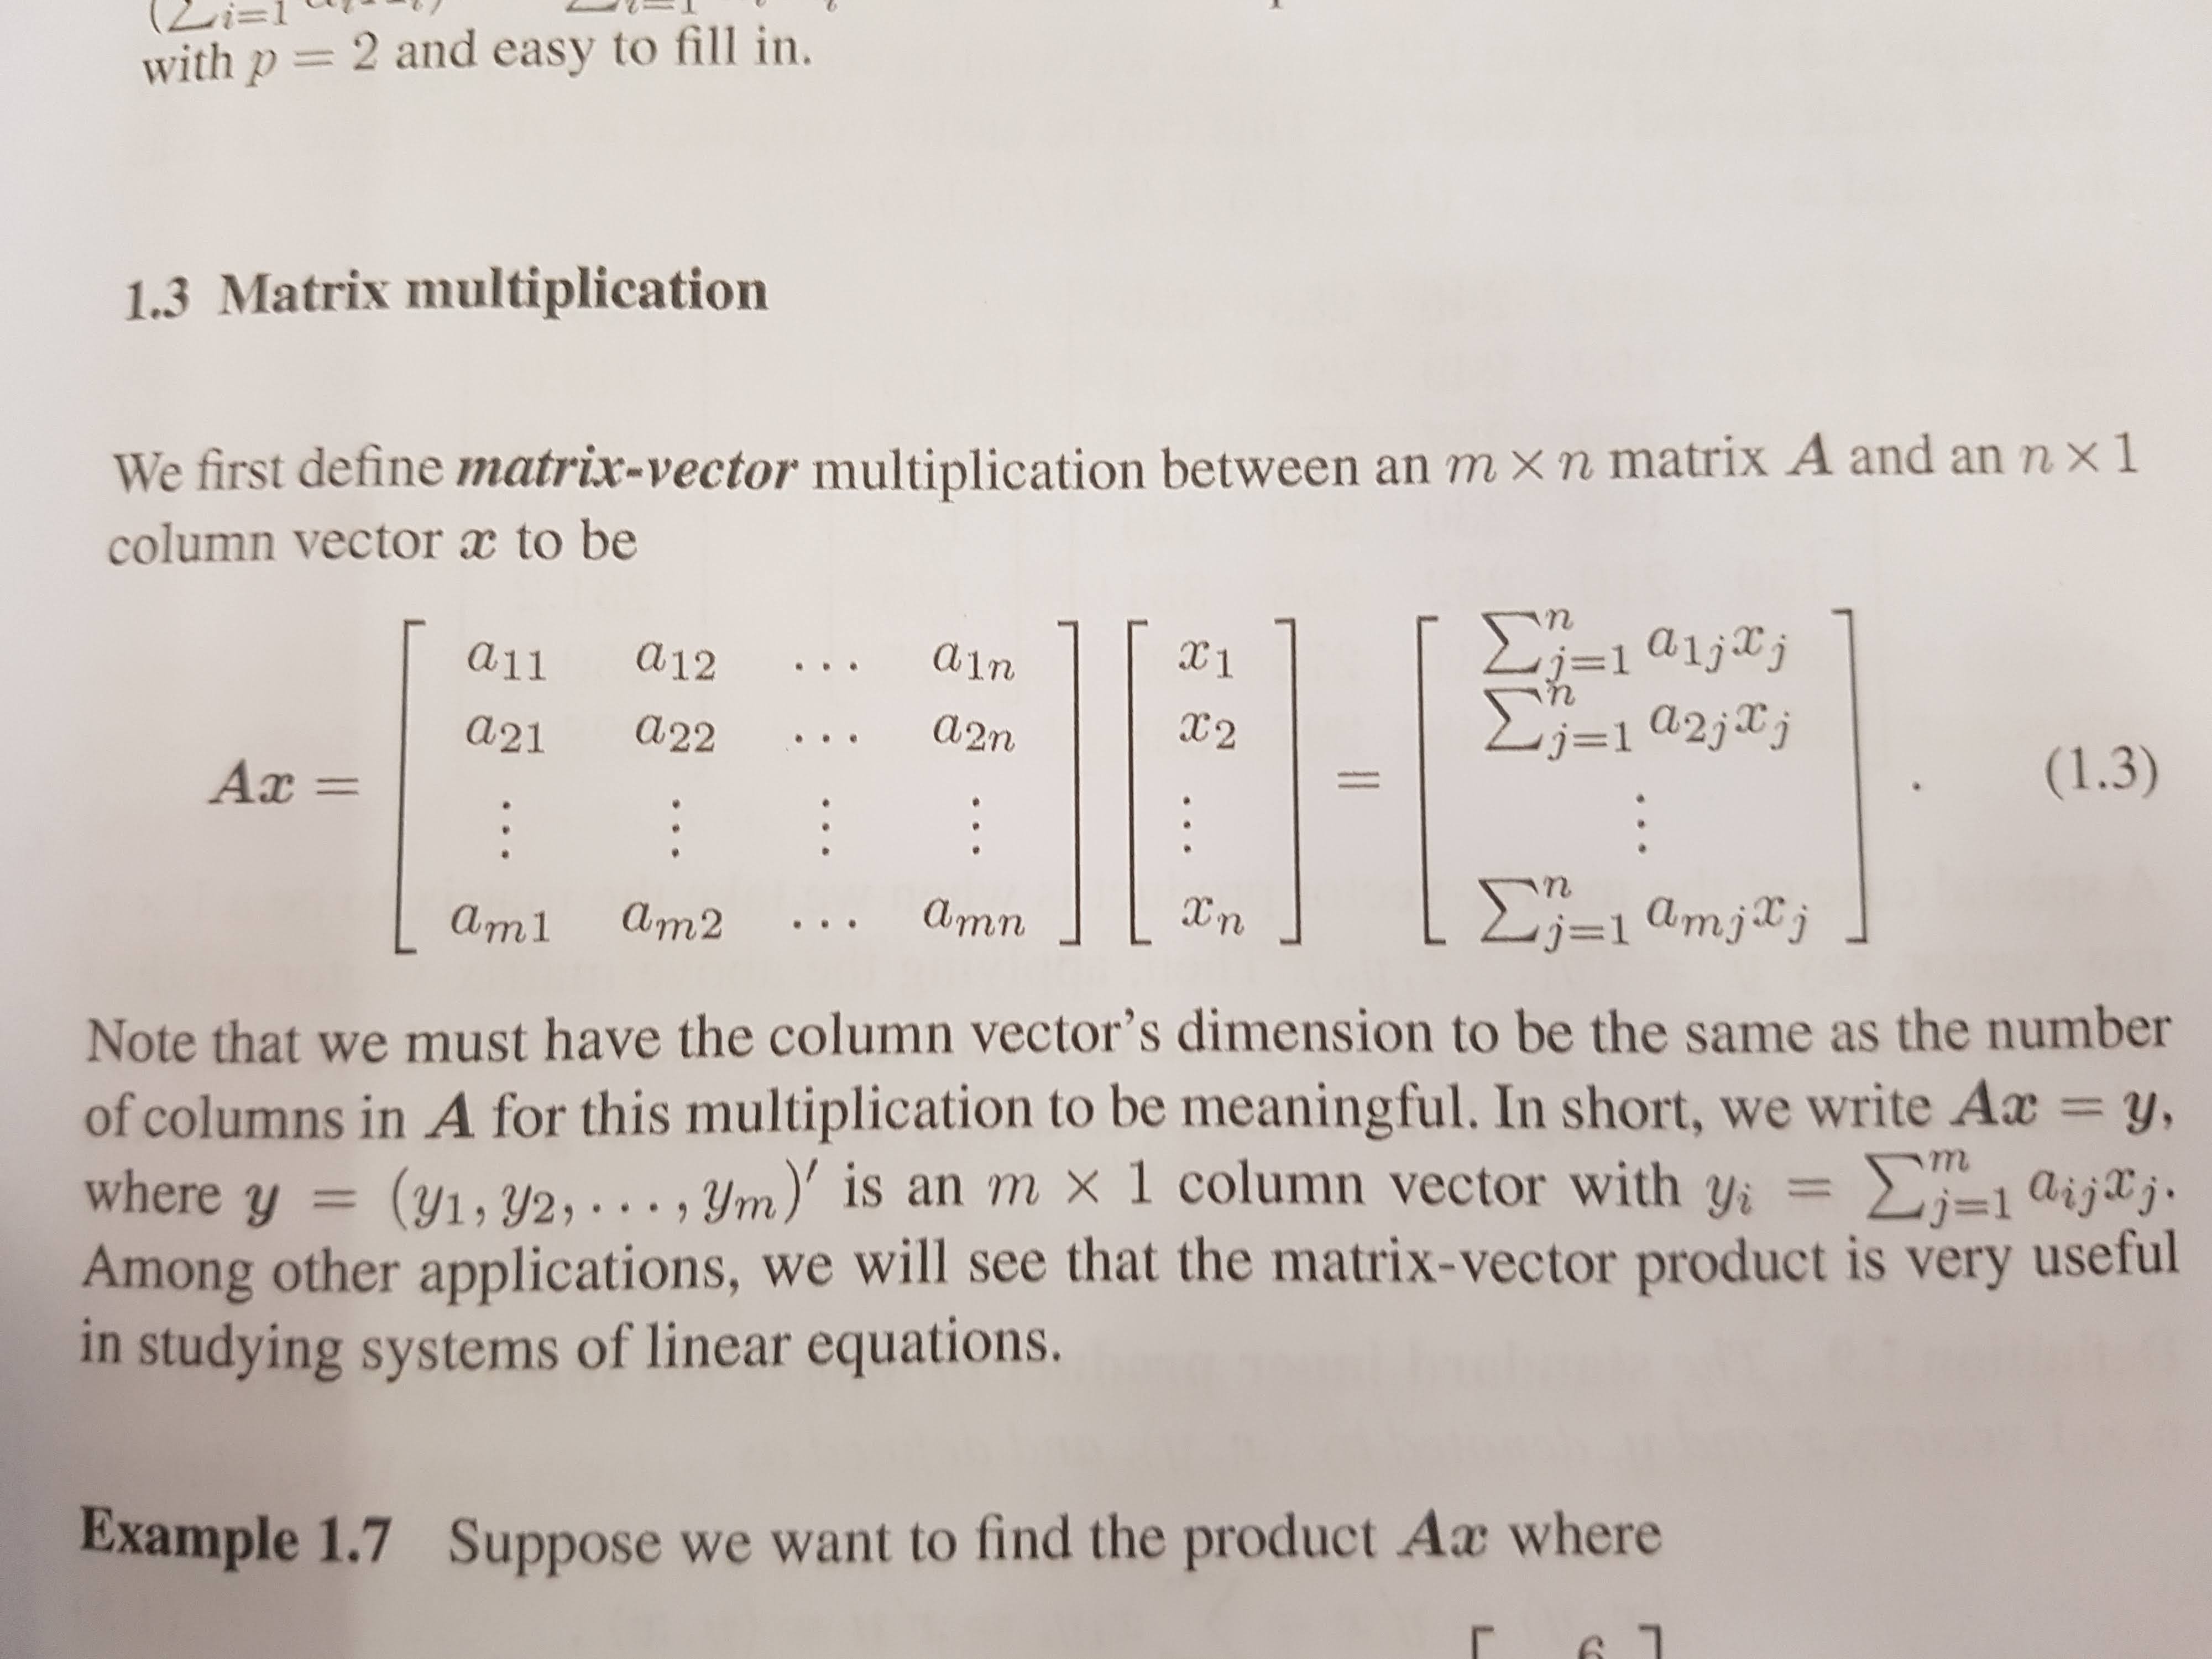 Textbook definition of matrix-vector multiplication